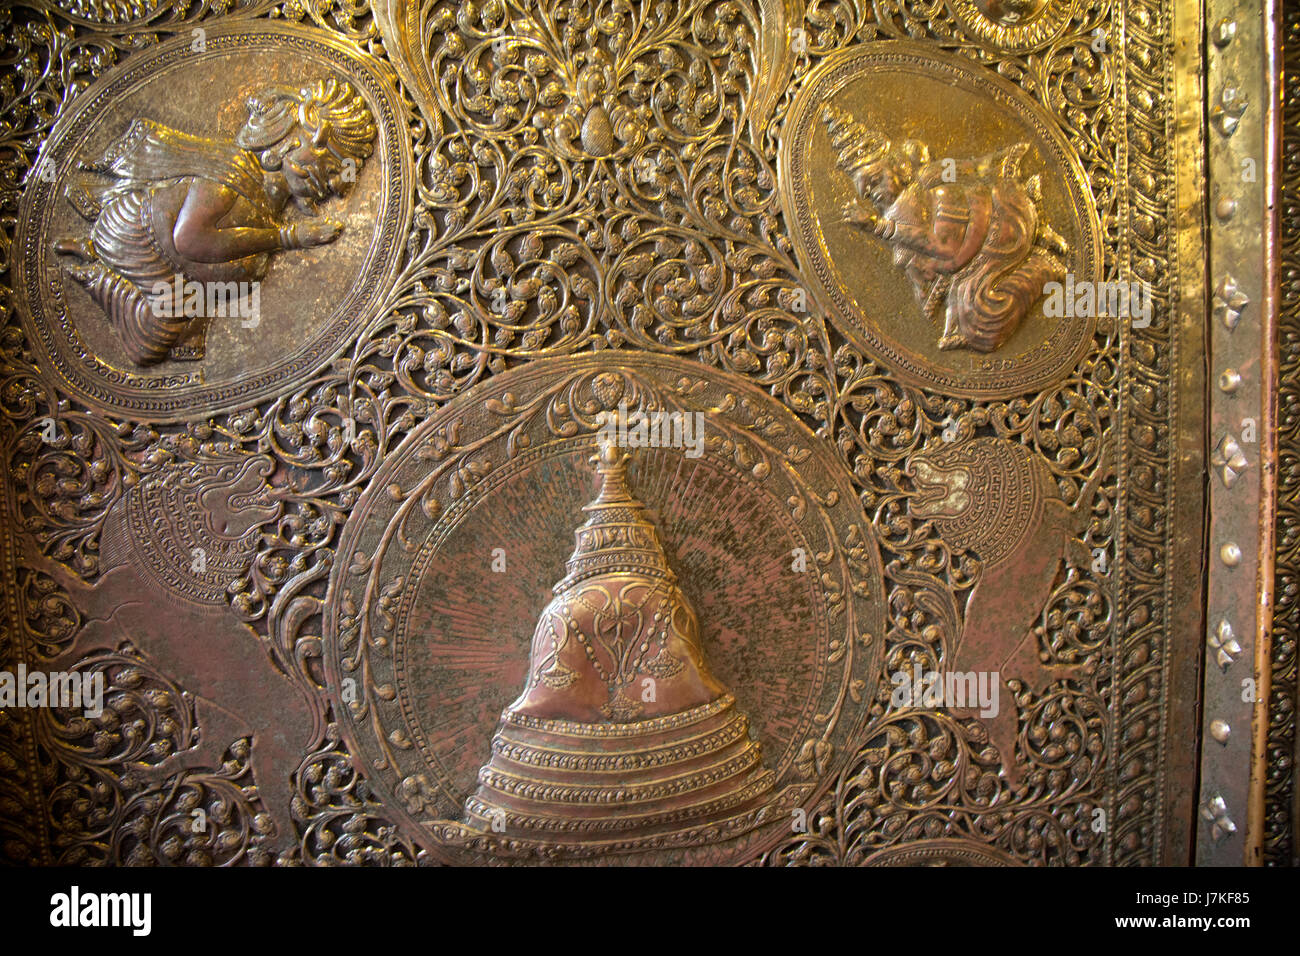 Kandy Sri Lanka Temple of the Sacred Tooth detail of pagoda on screen Stock Photo